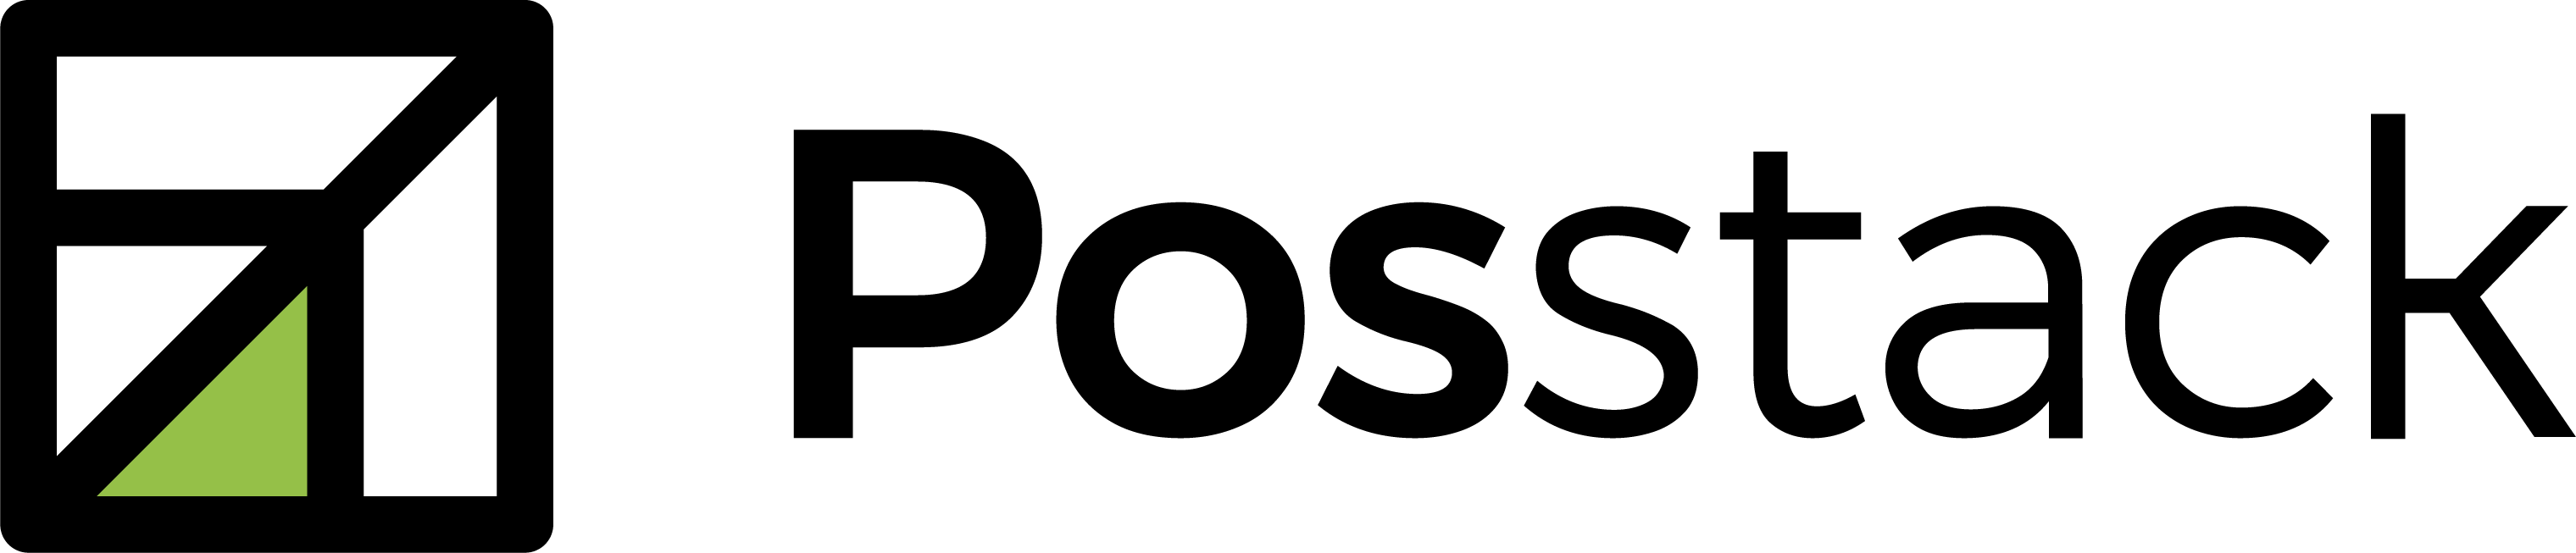 Posstack logo